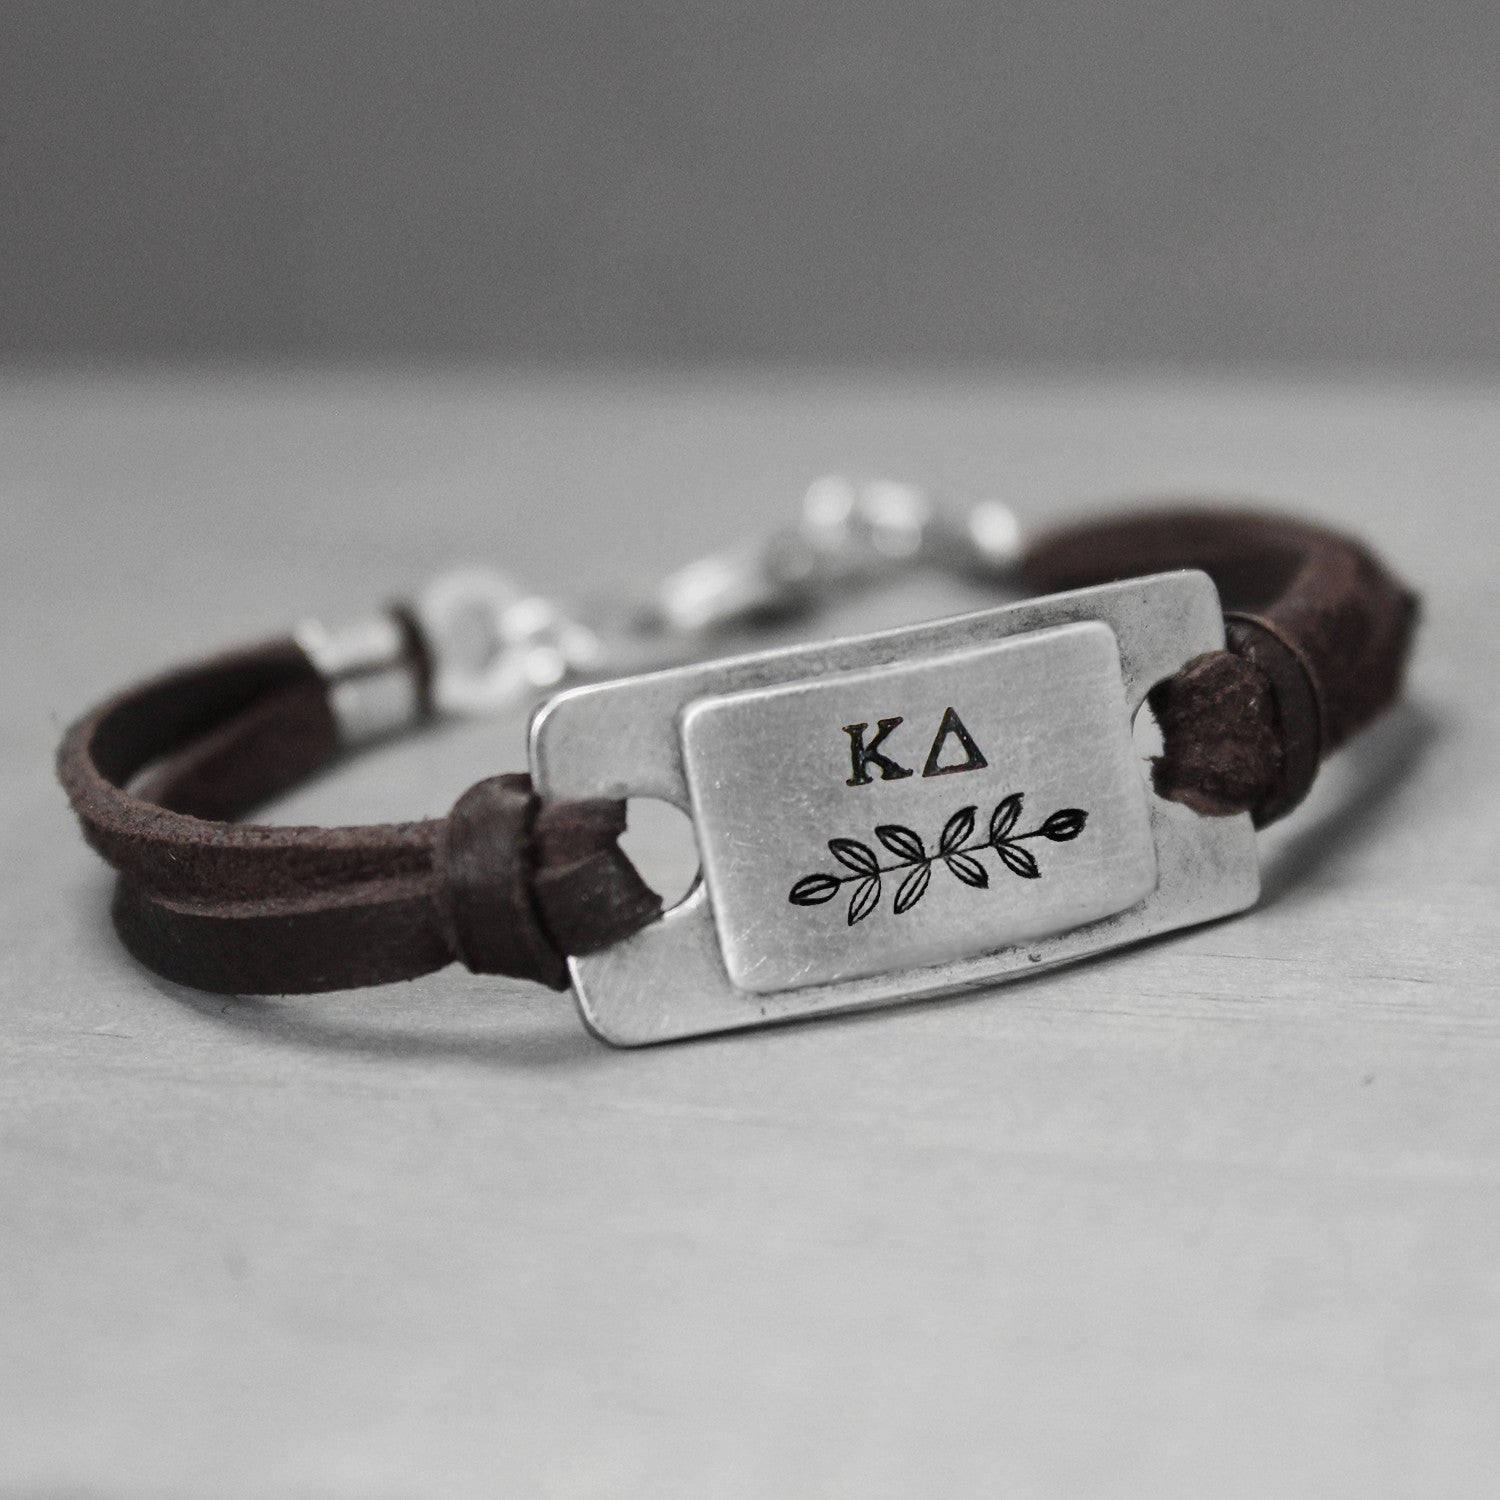 Kappa Delta Leather Bracelet 